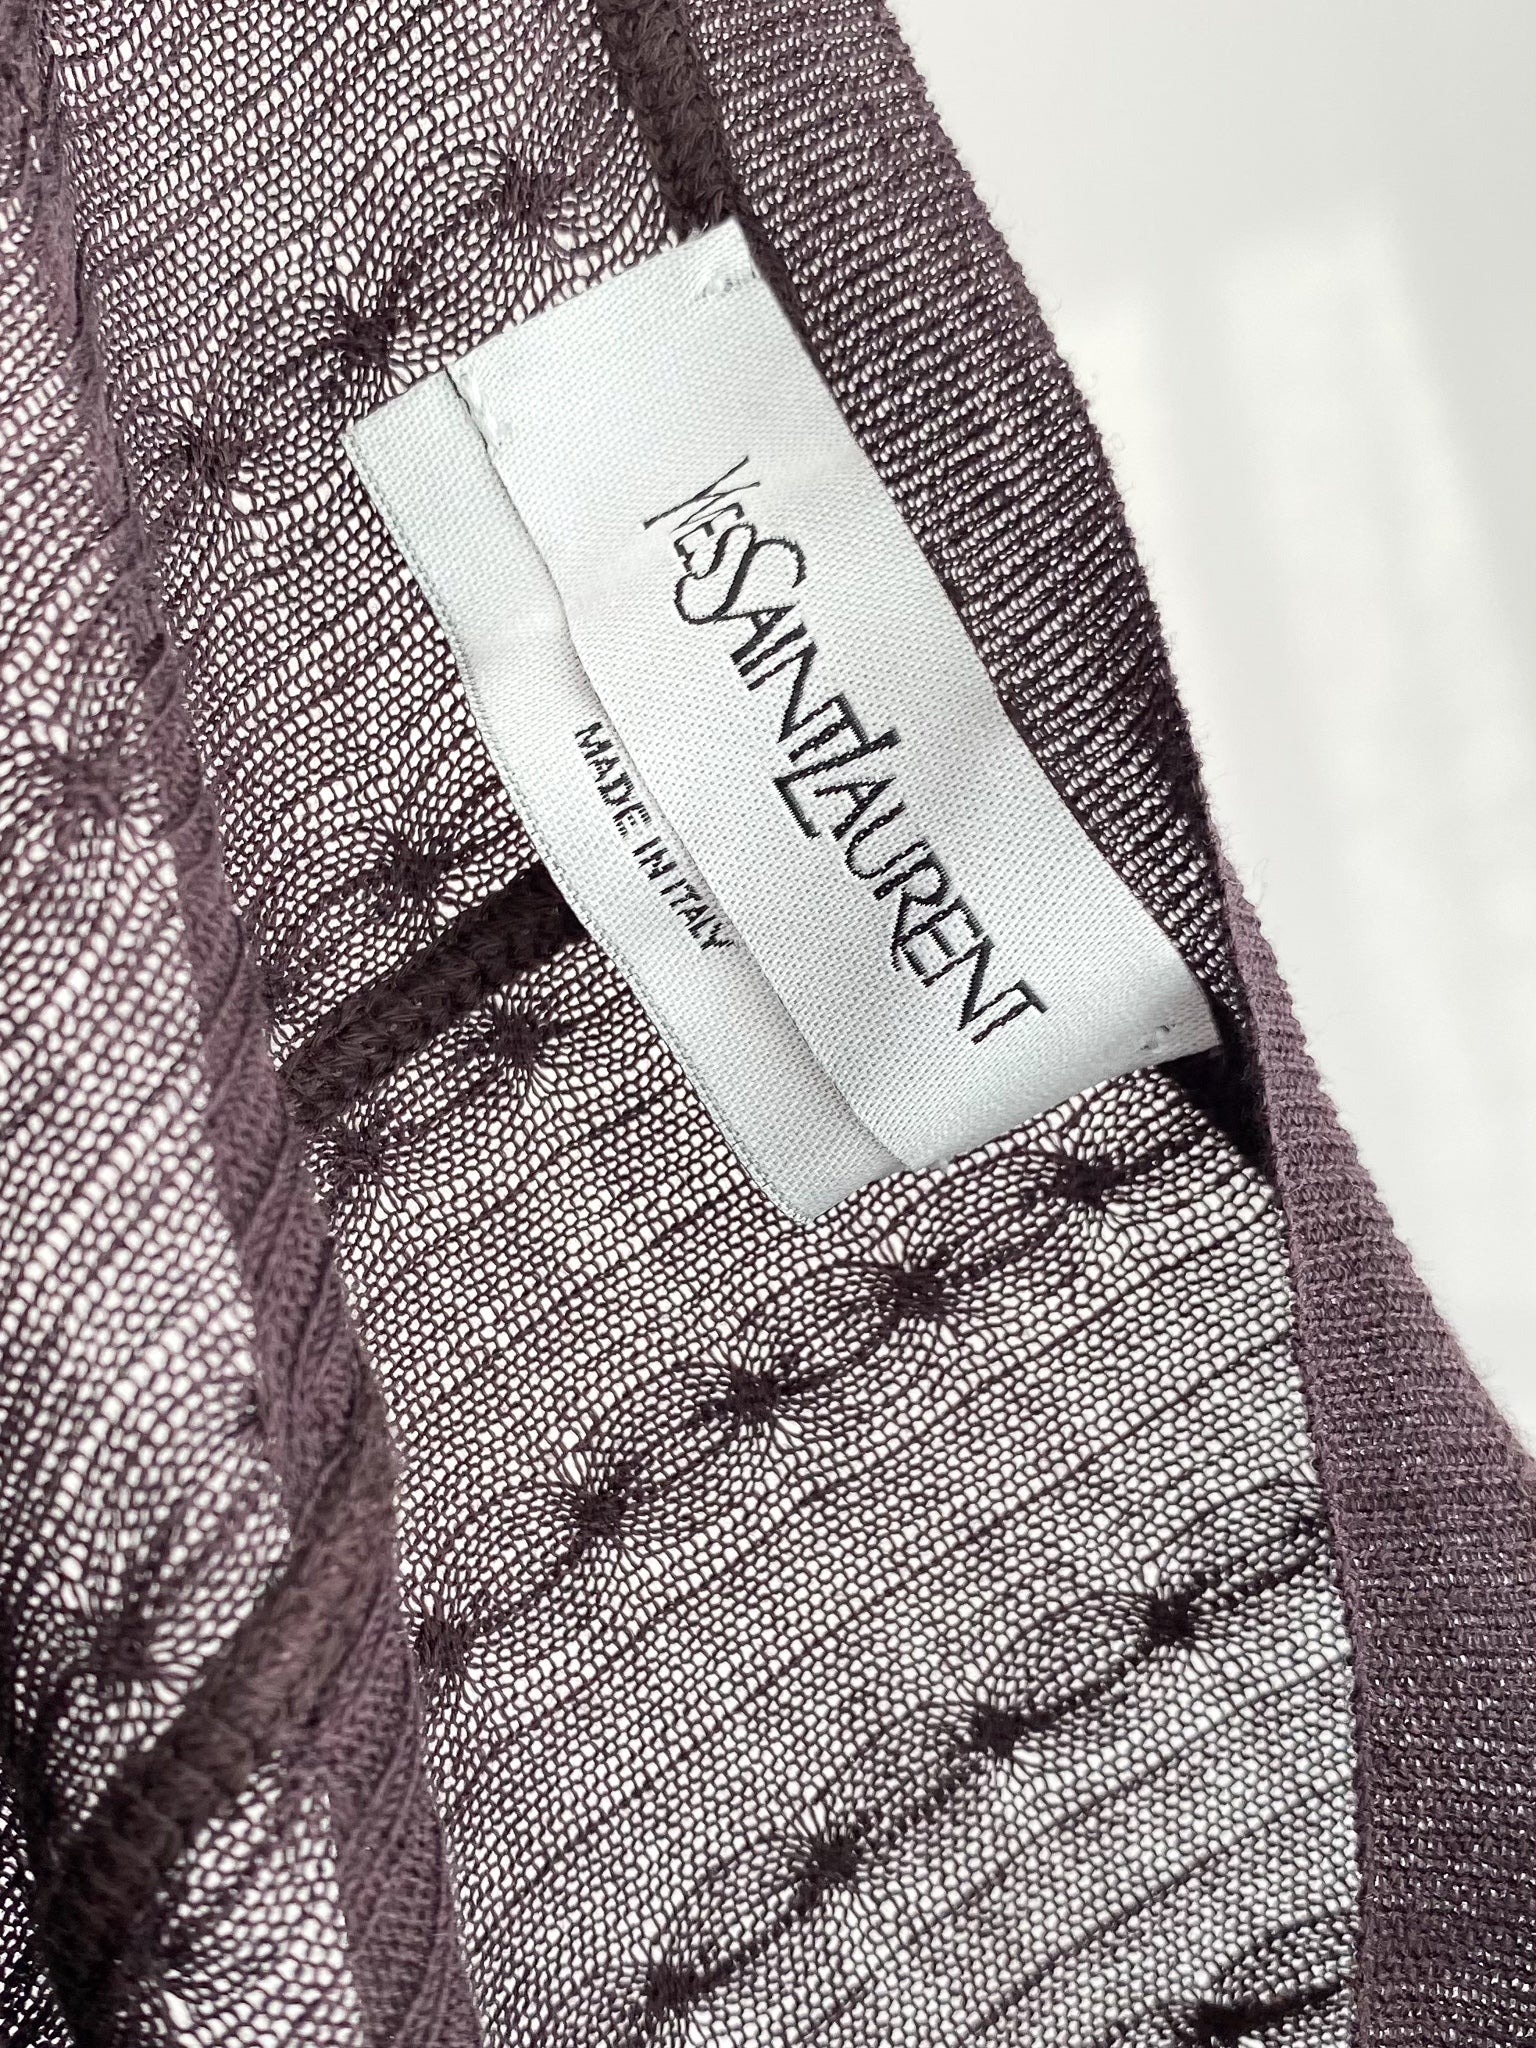 Yves Saint Laurent silk top